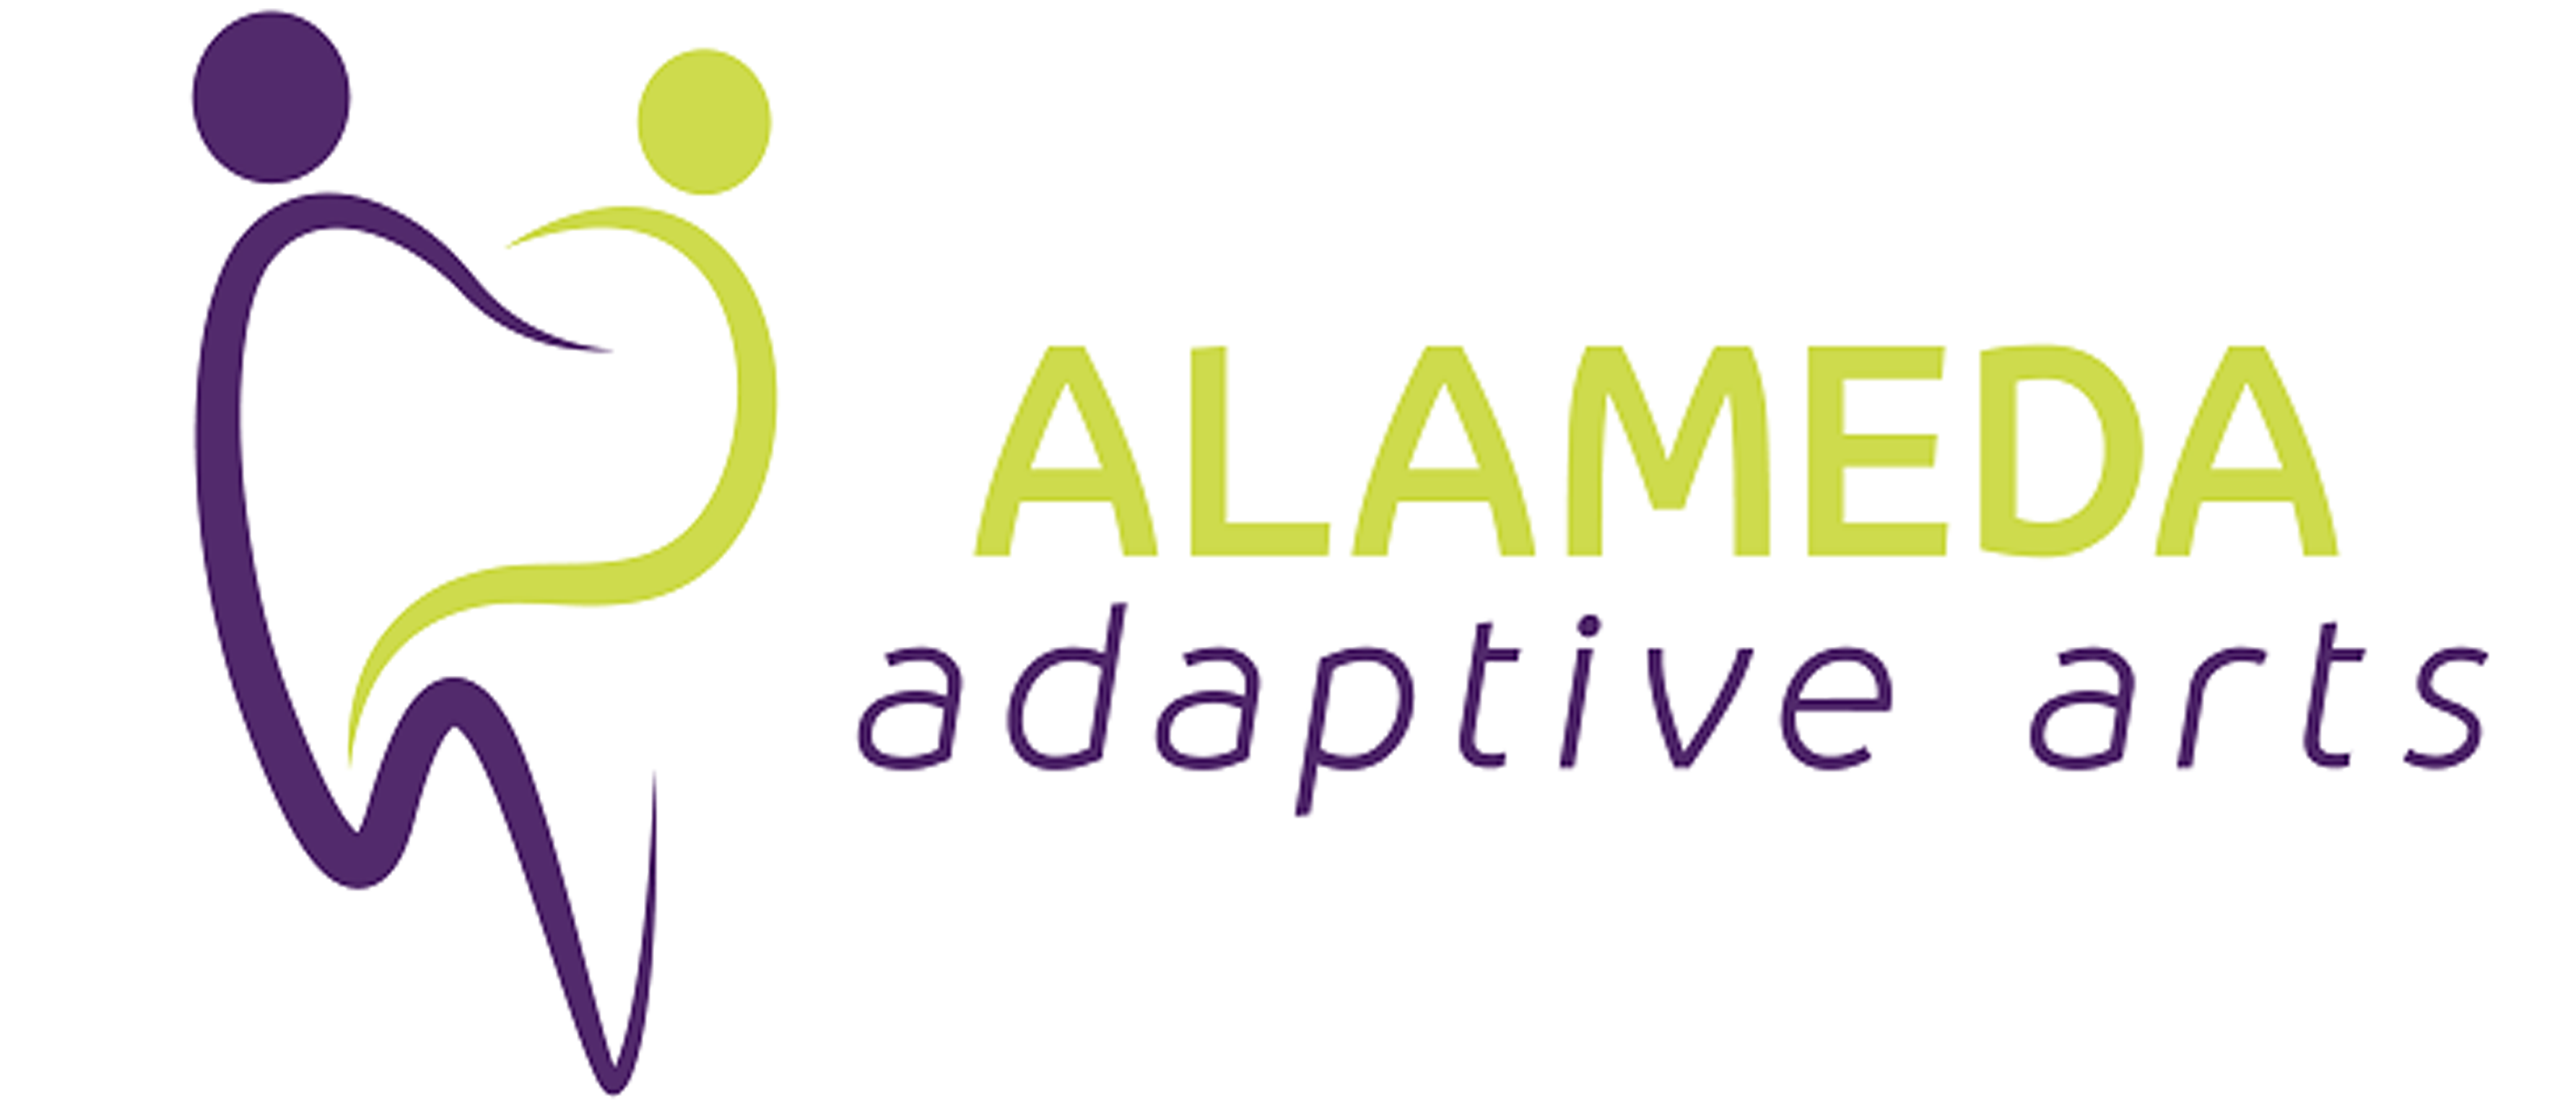 Alameda Adaptive Arts